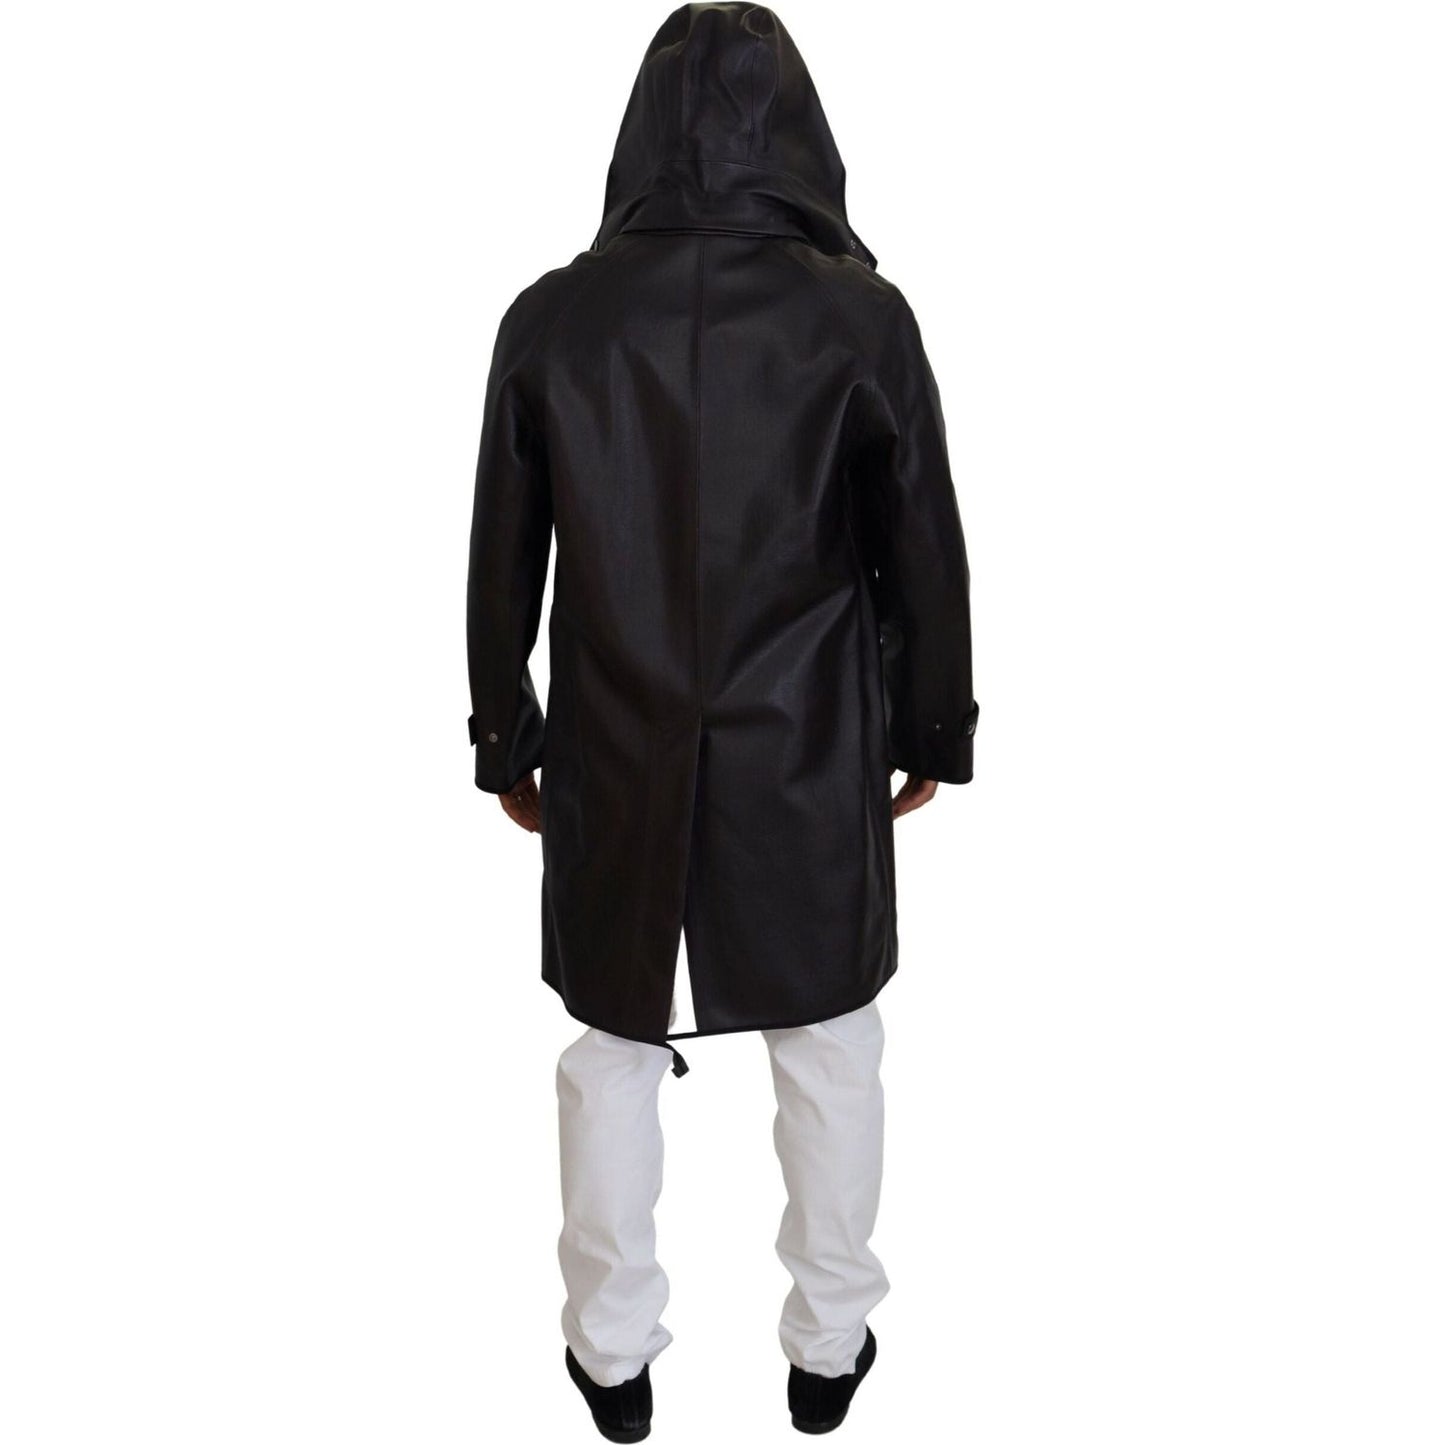 Dolce & Gabbana Elegant Hooded Parka Coat in Black and Bordeaux black-trench-hooded-parka-cotton-jacket